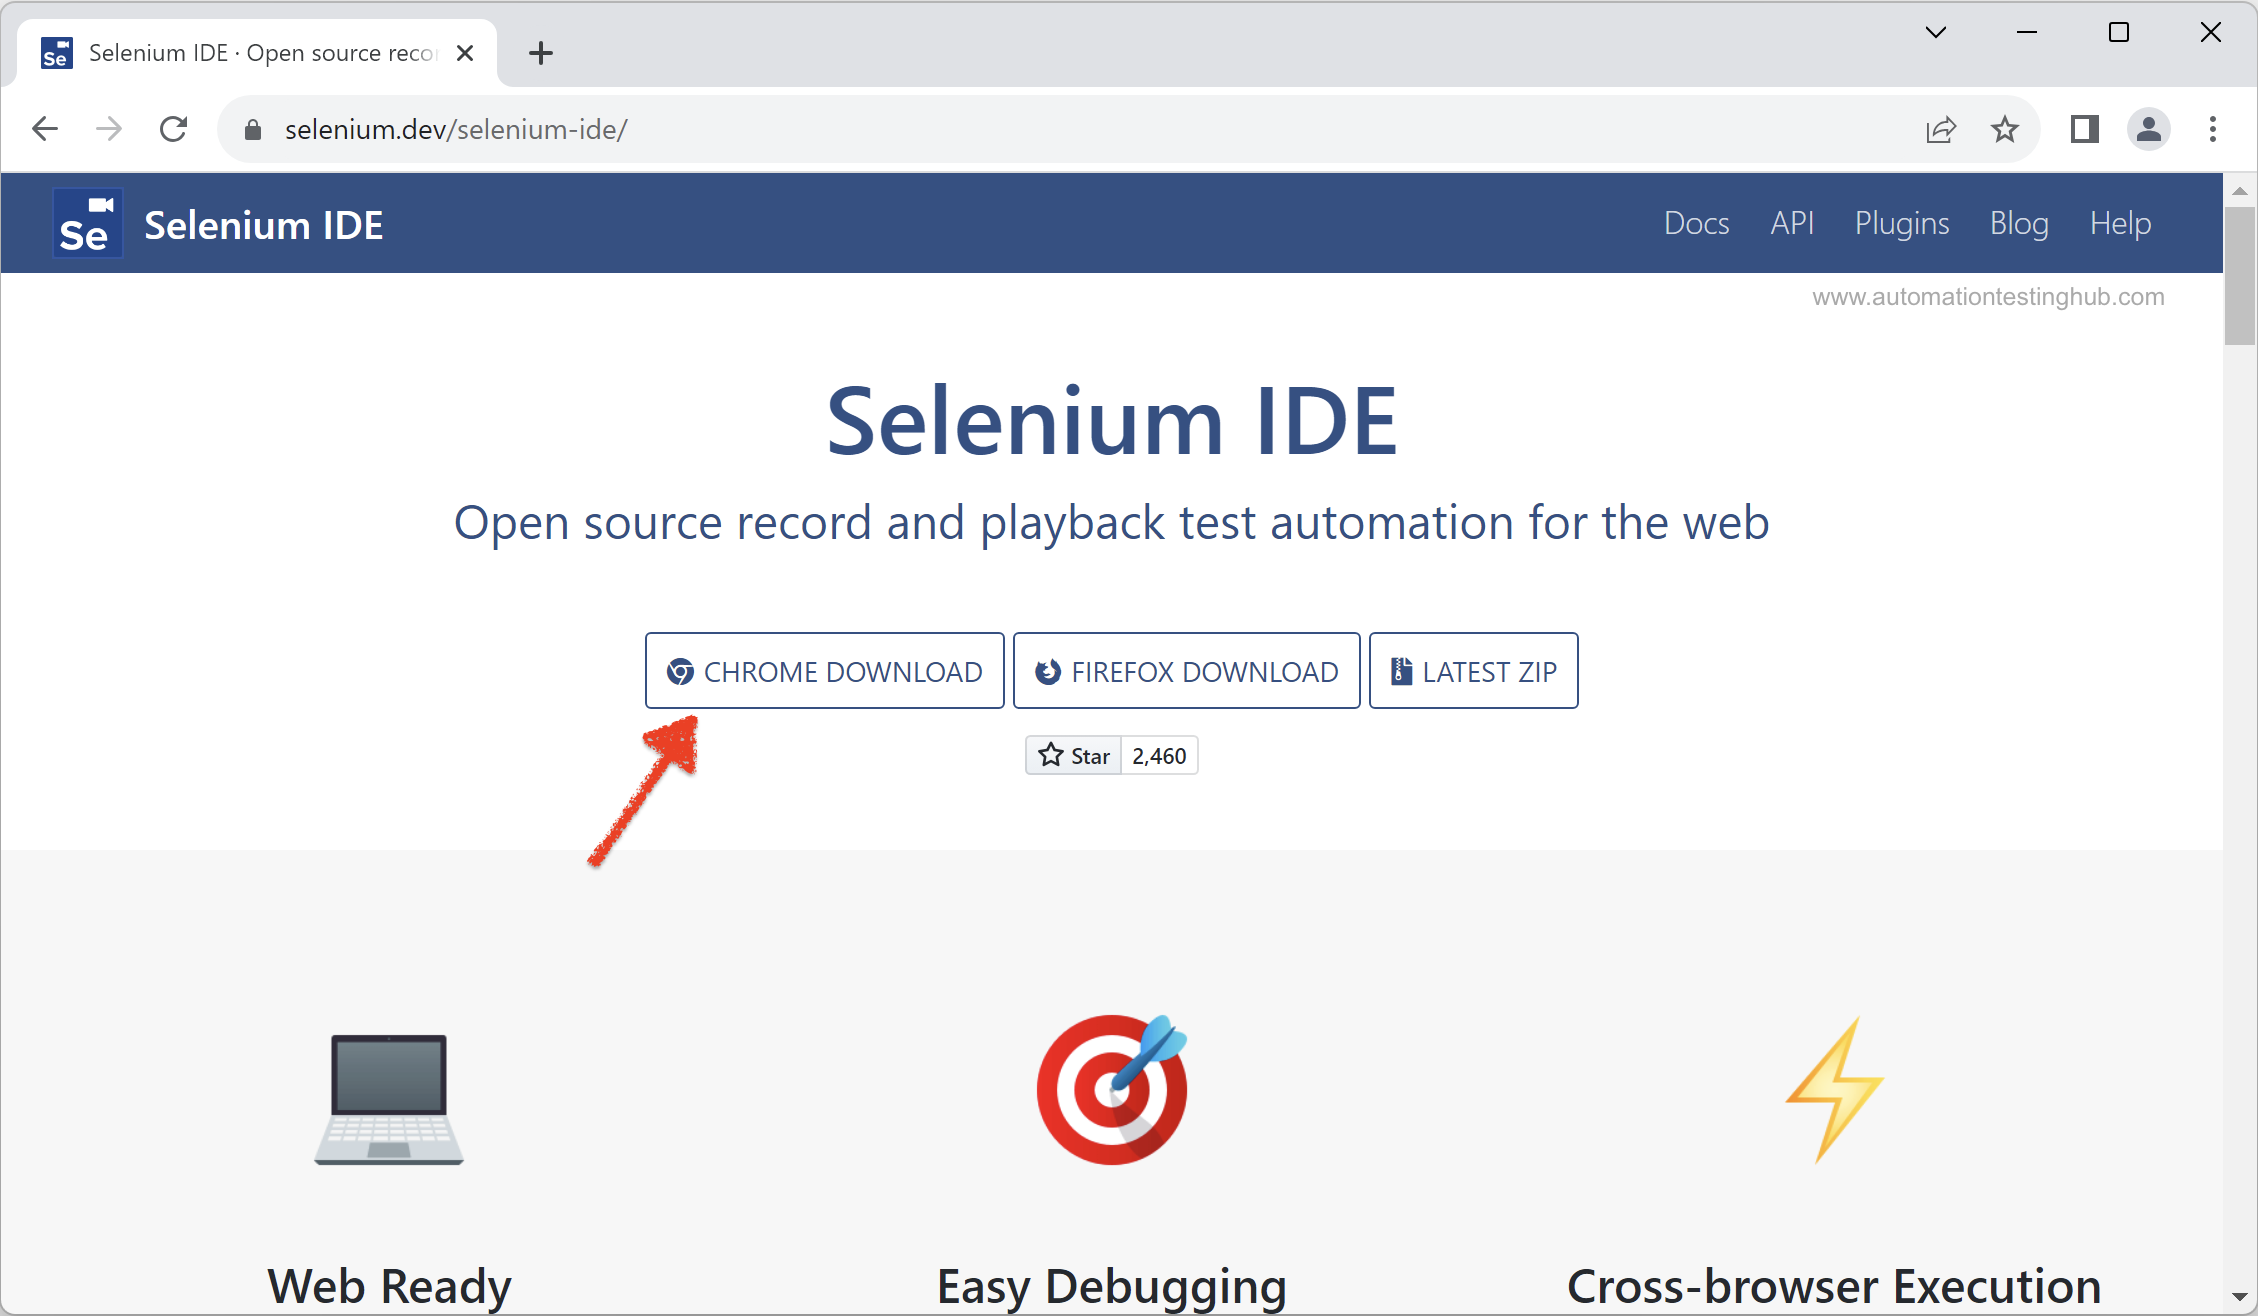 Selenium IDE chrome download link